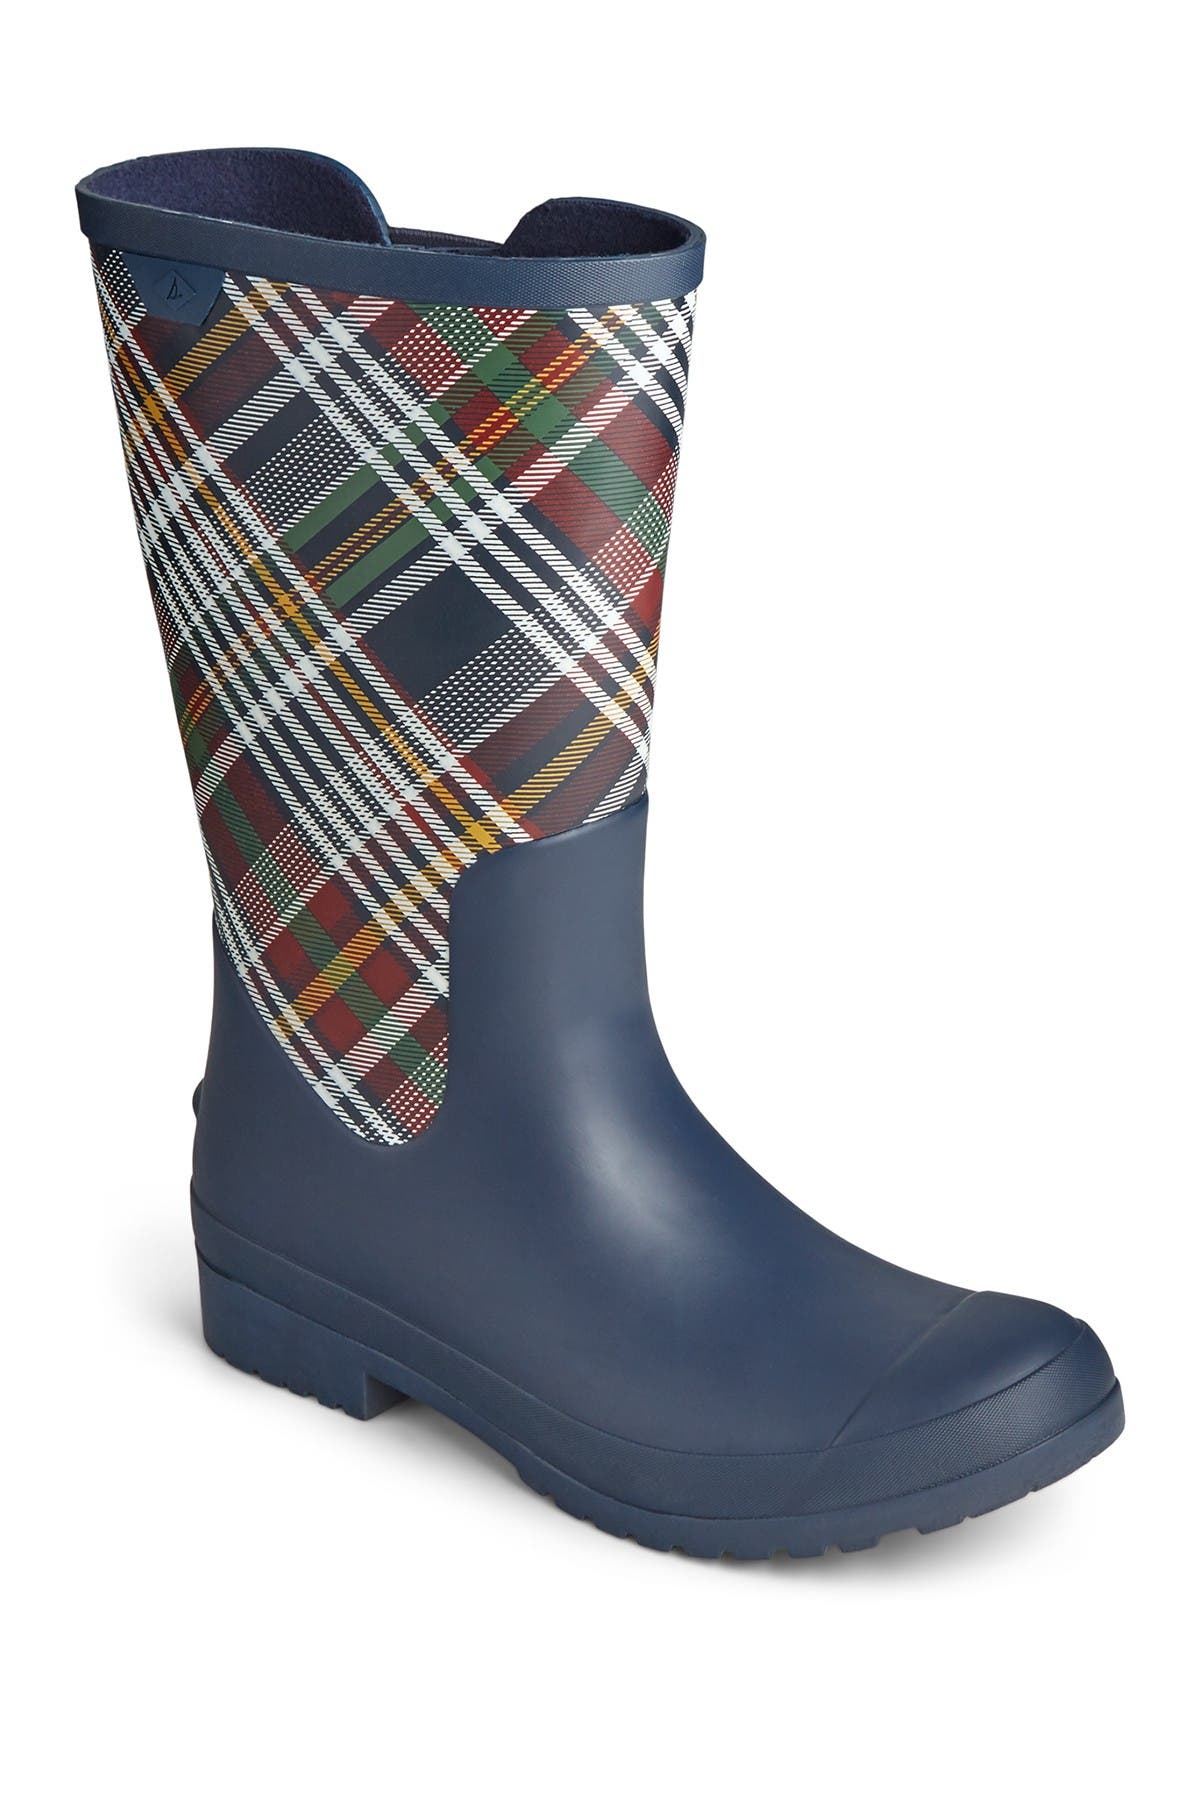 sperry walker rain boots